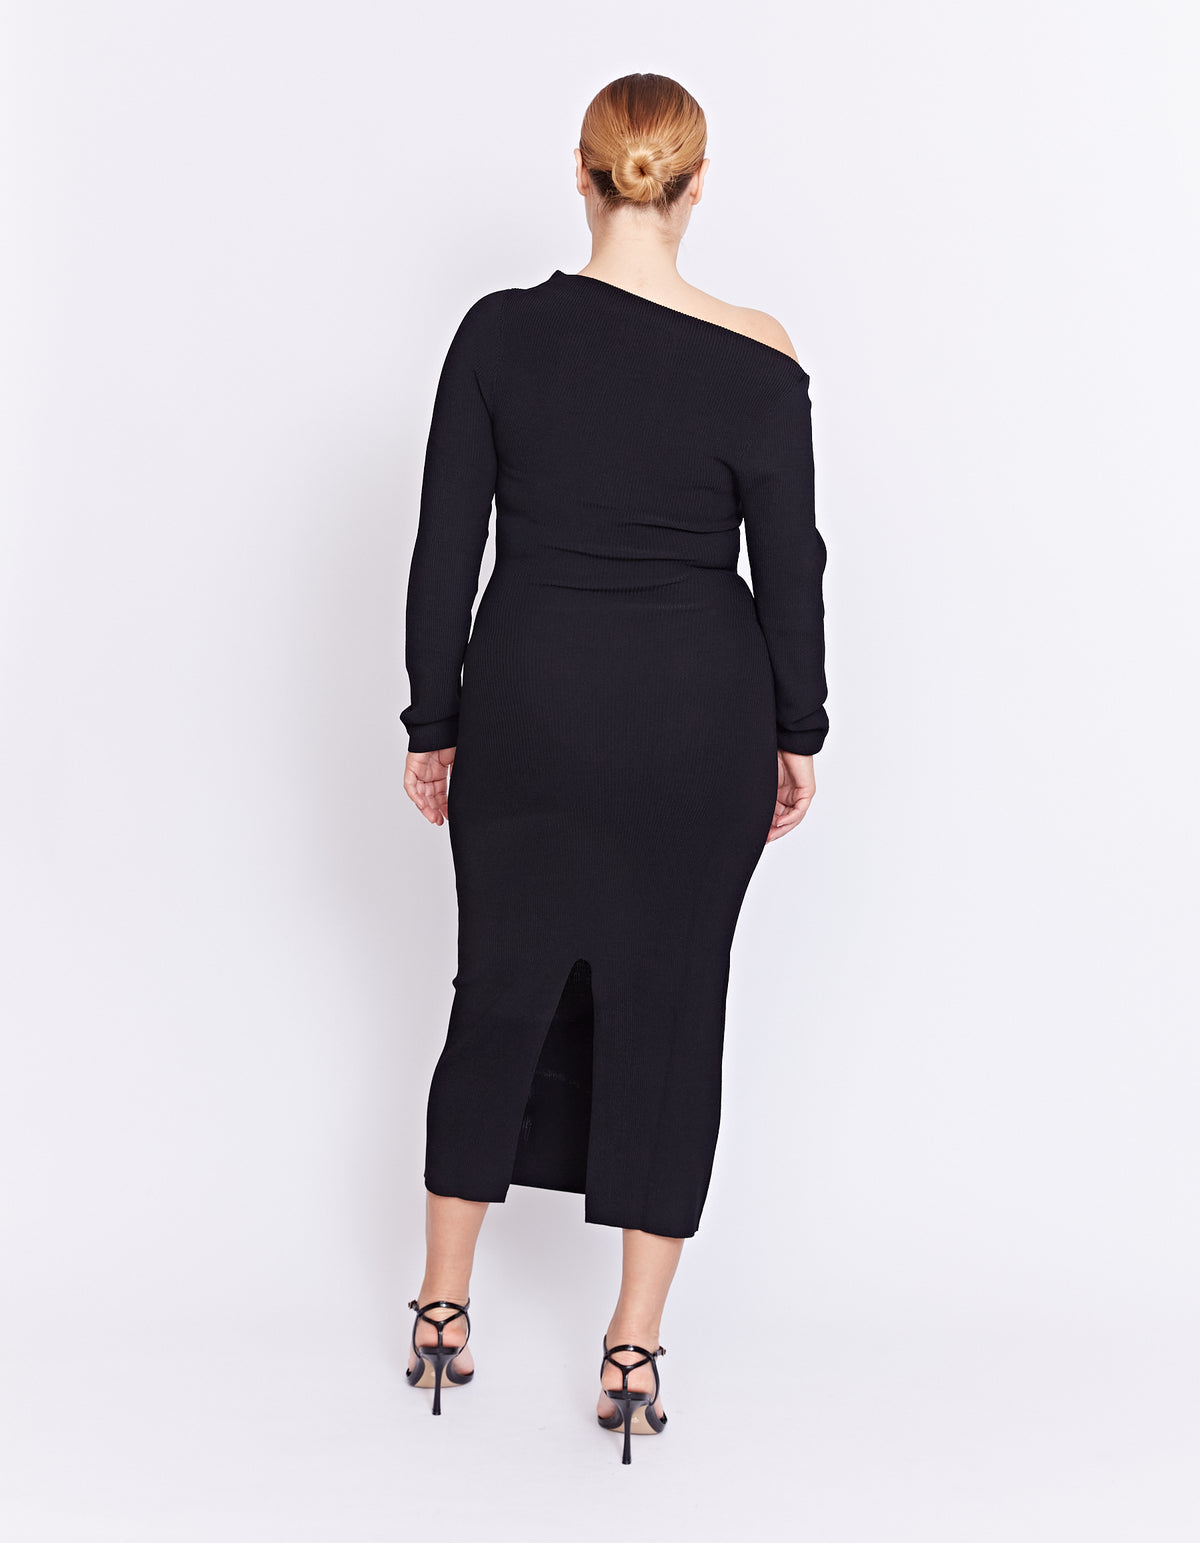 CALABRIA KNIT DRESS | BLACK